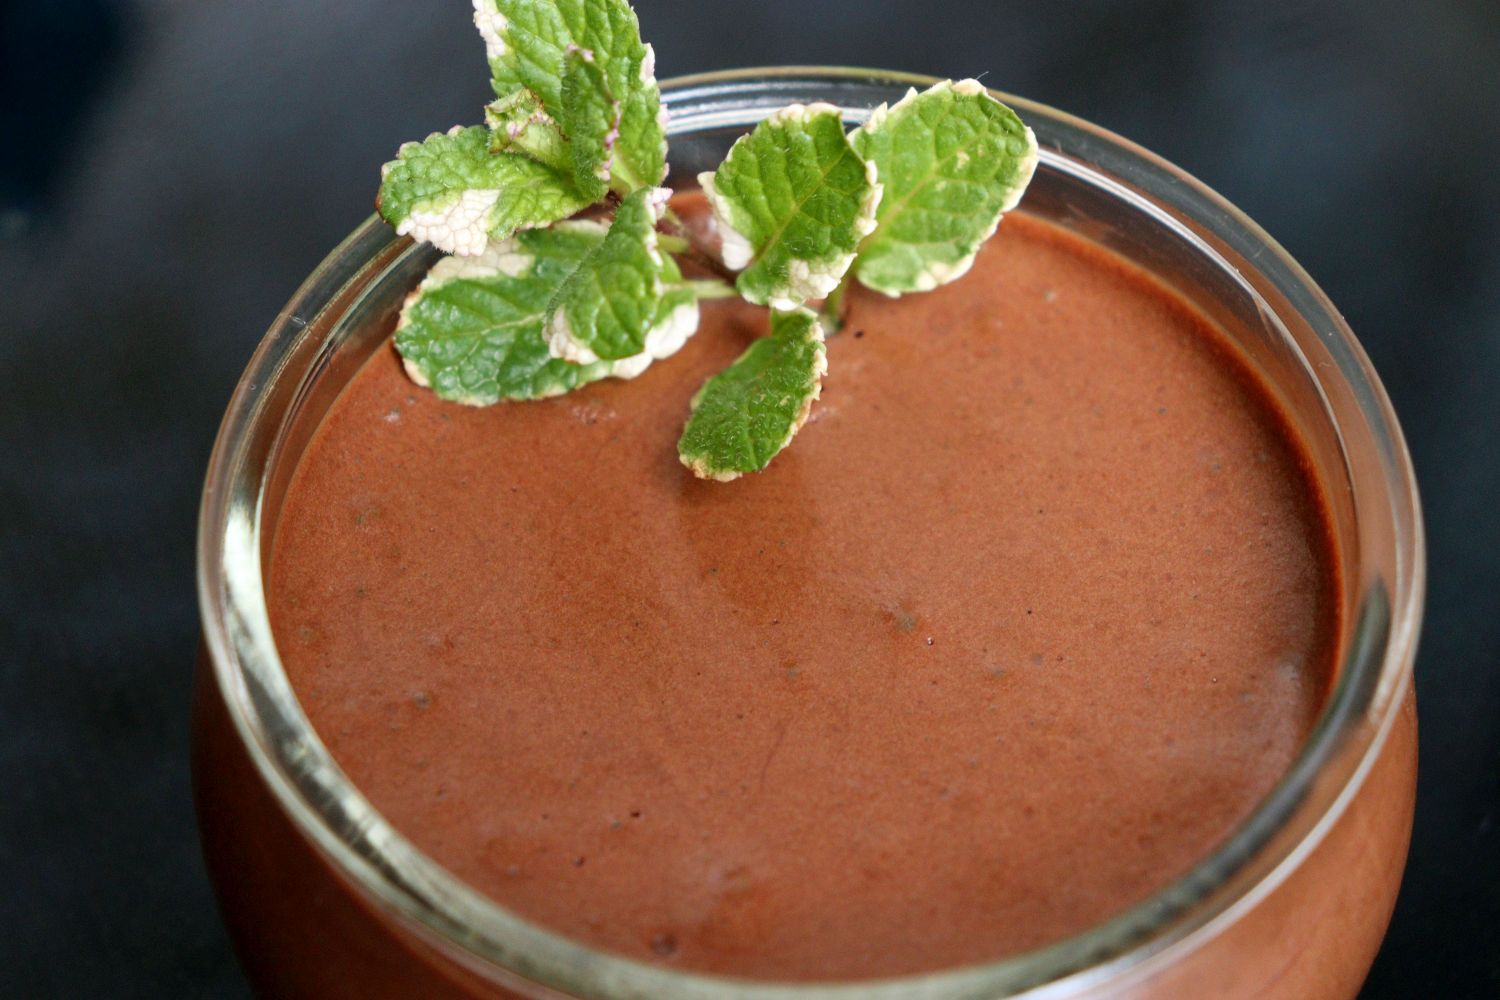 Nina Recipes - Chocolate Mousse (Mousse au chocolat): enjoy the chocolate mousse with fresh mint leaves